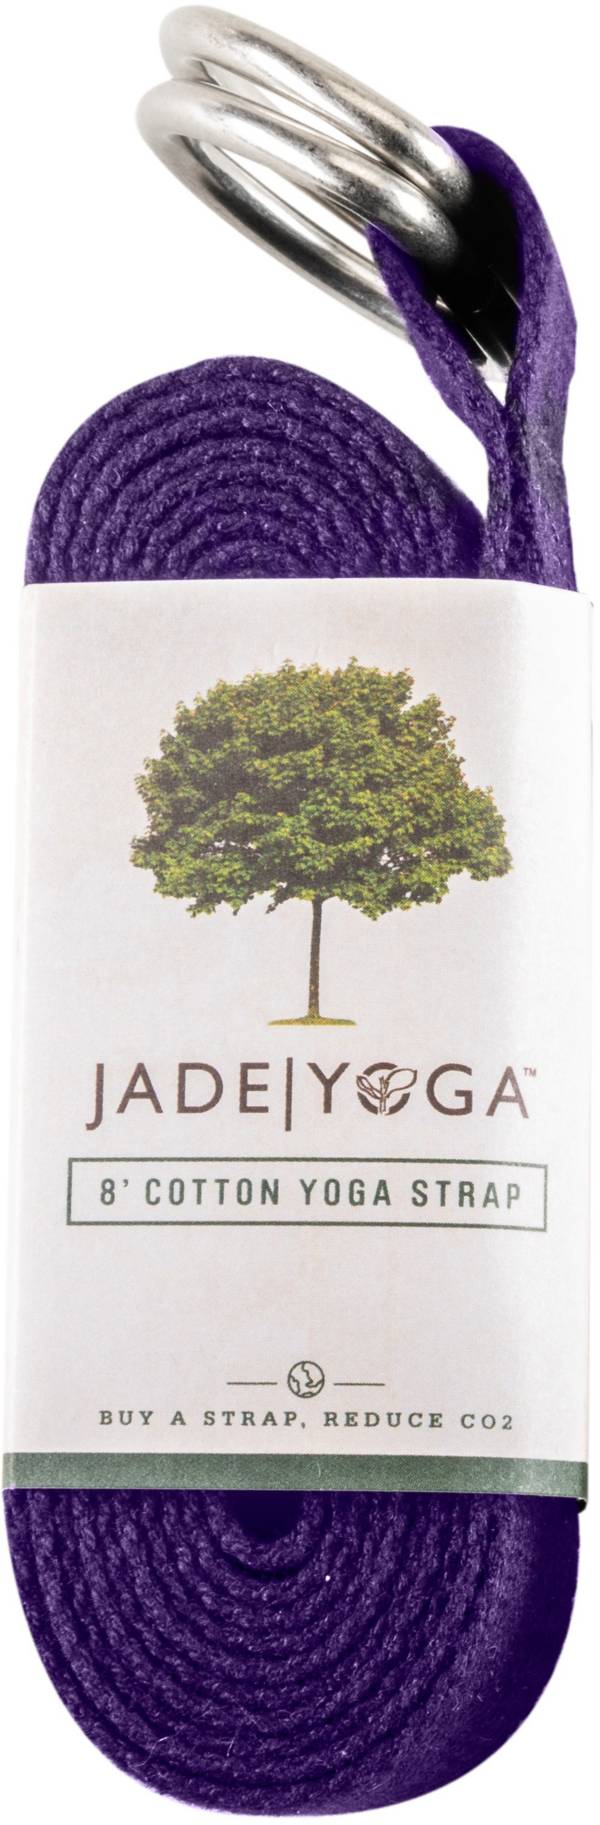 Jade Yoga 8 Foot Strap product image